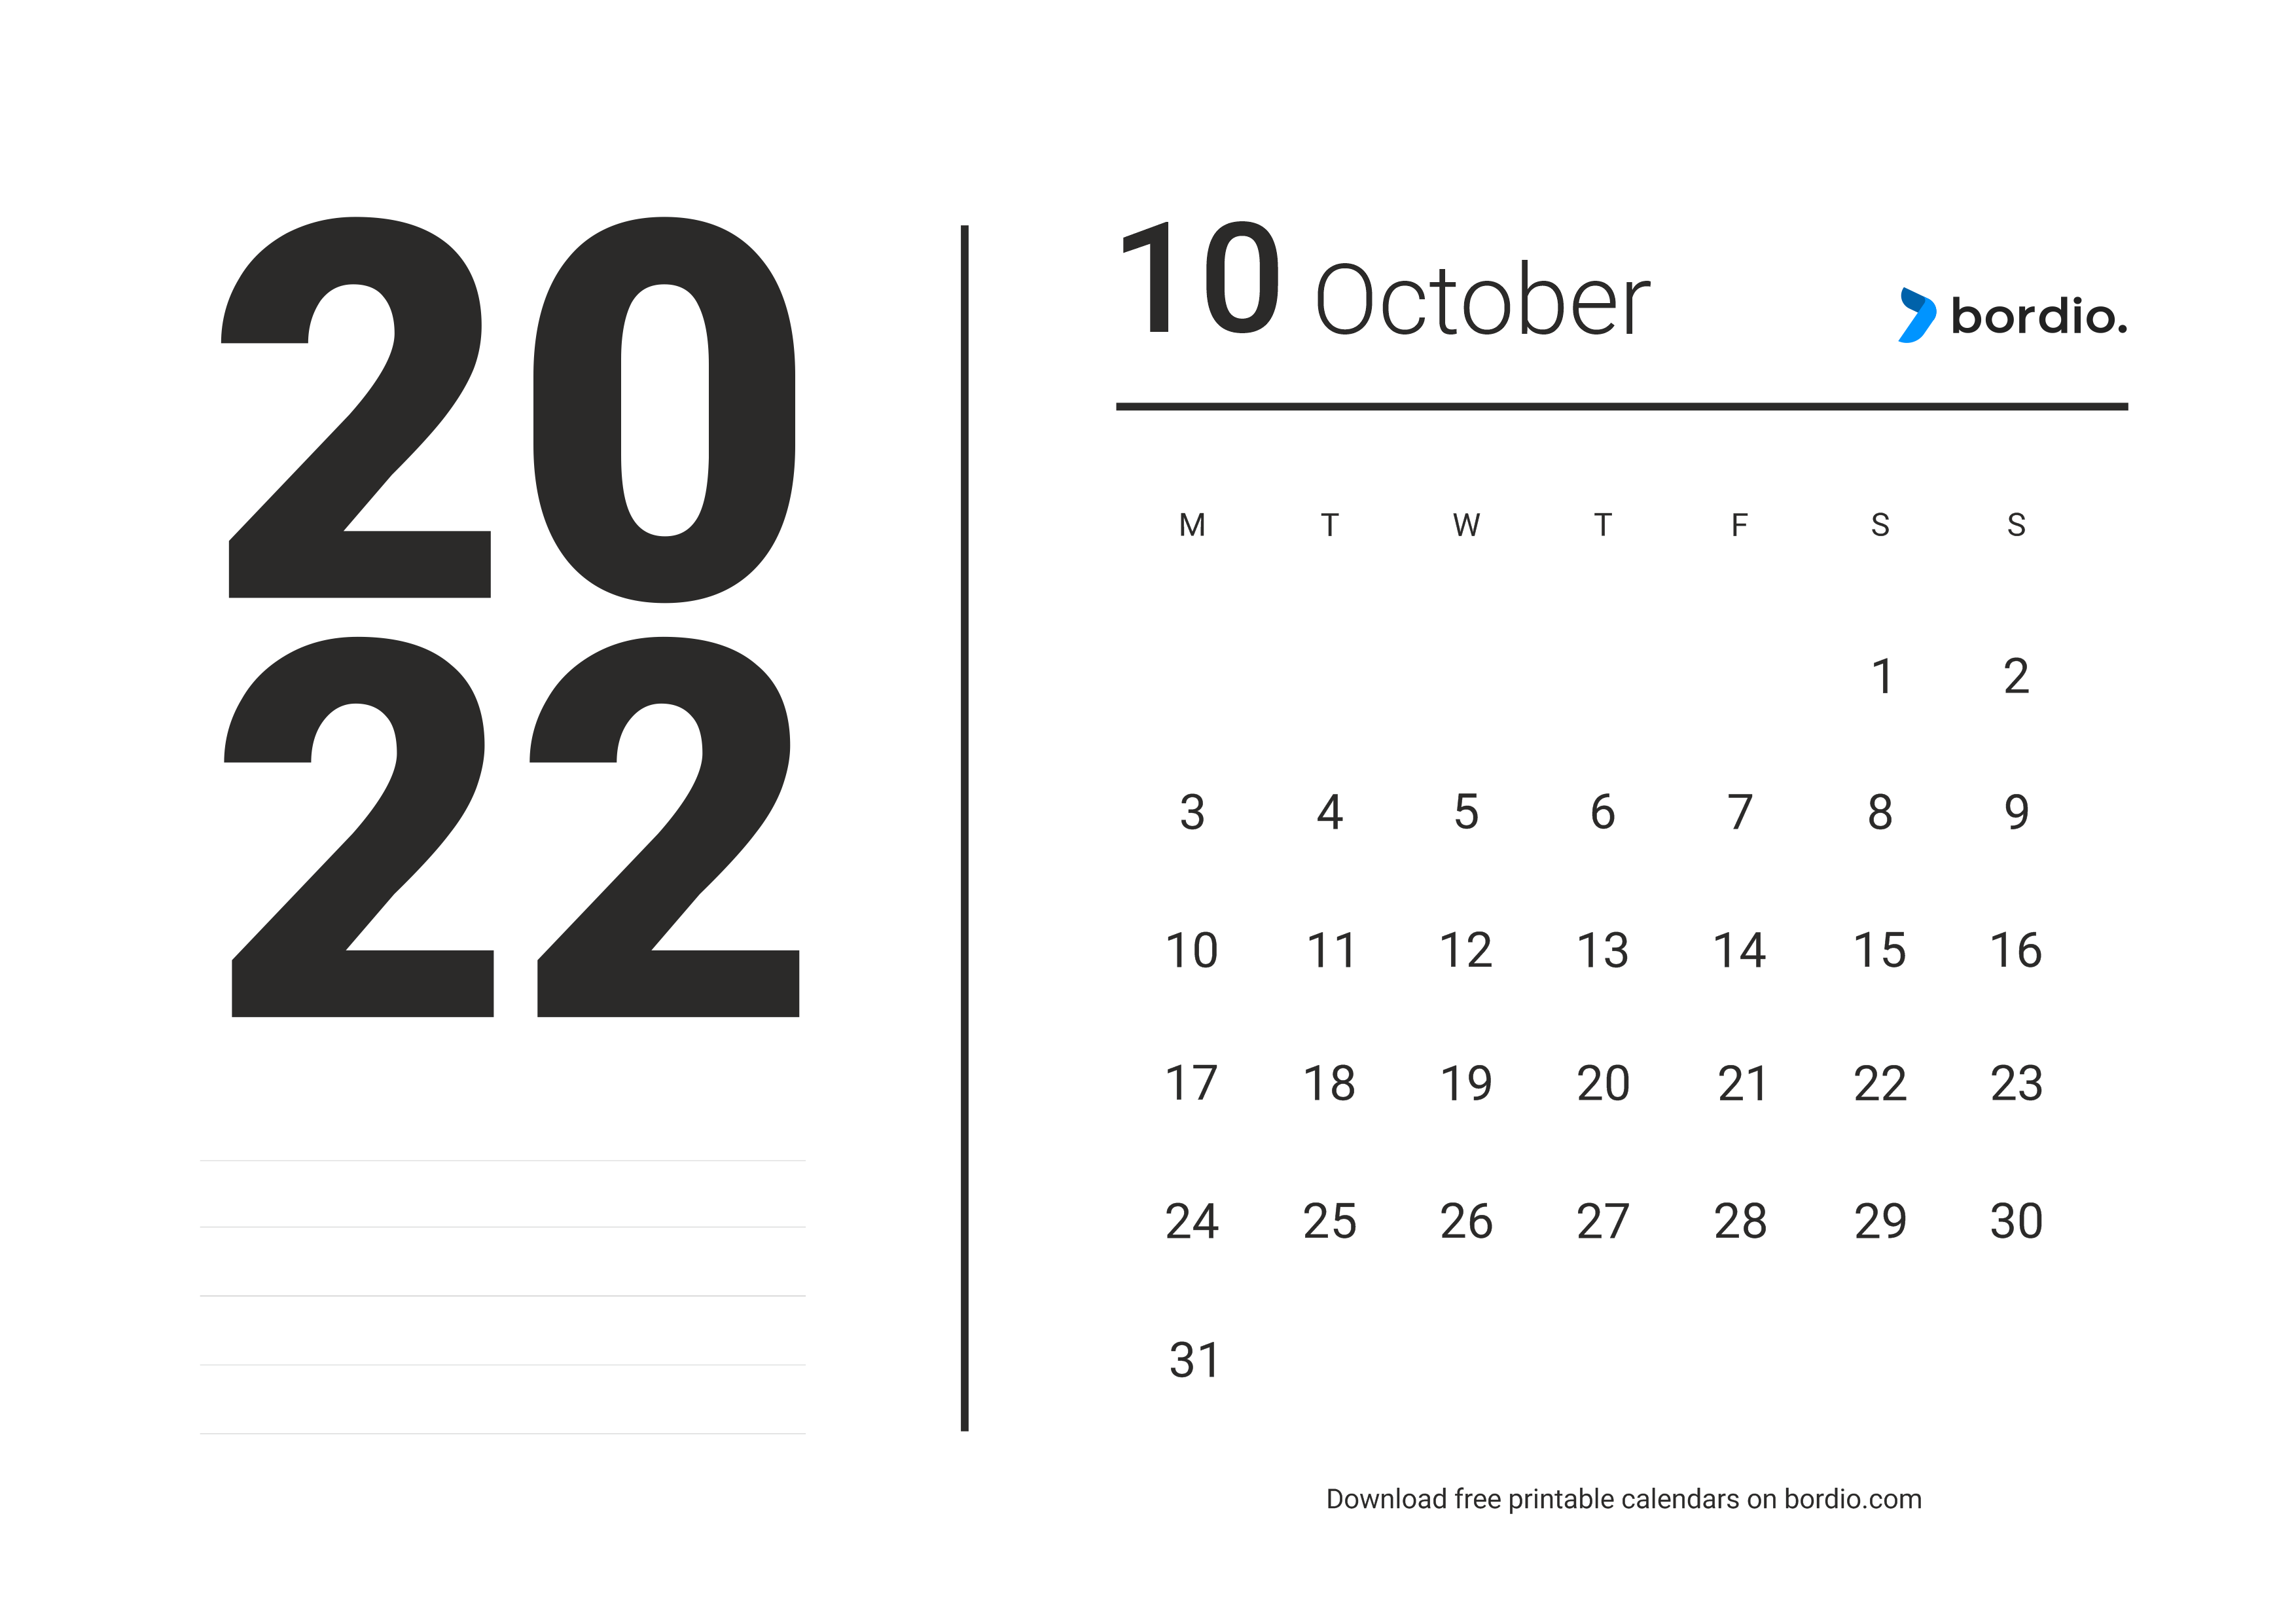 October 2022 Printable Calendar Templates For Free In Pdf Bordio 0181